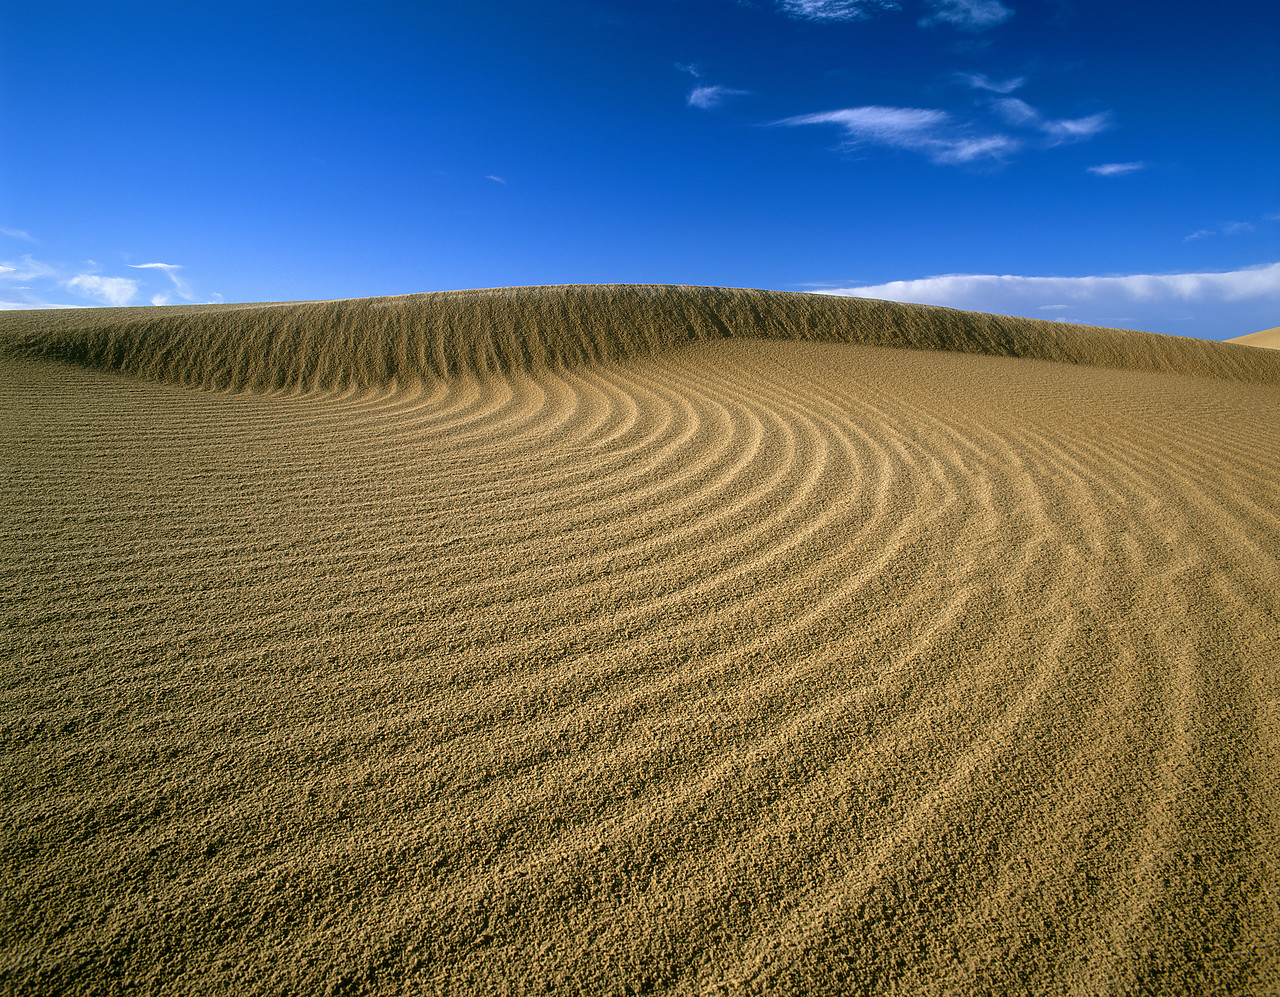 #980523-6 - Sand Dune Patterns. Algodones Dunes Wilderness Area, California, USA